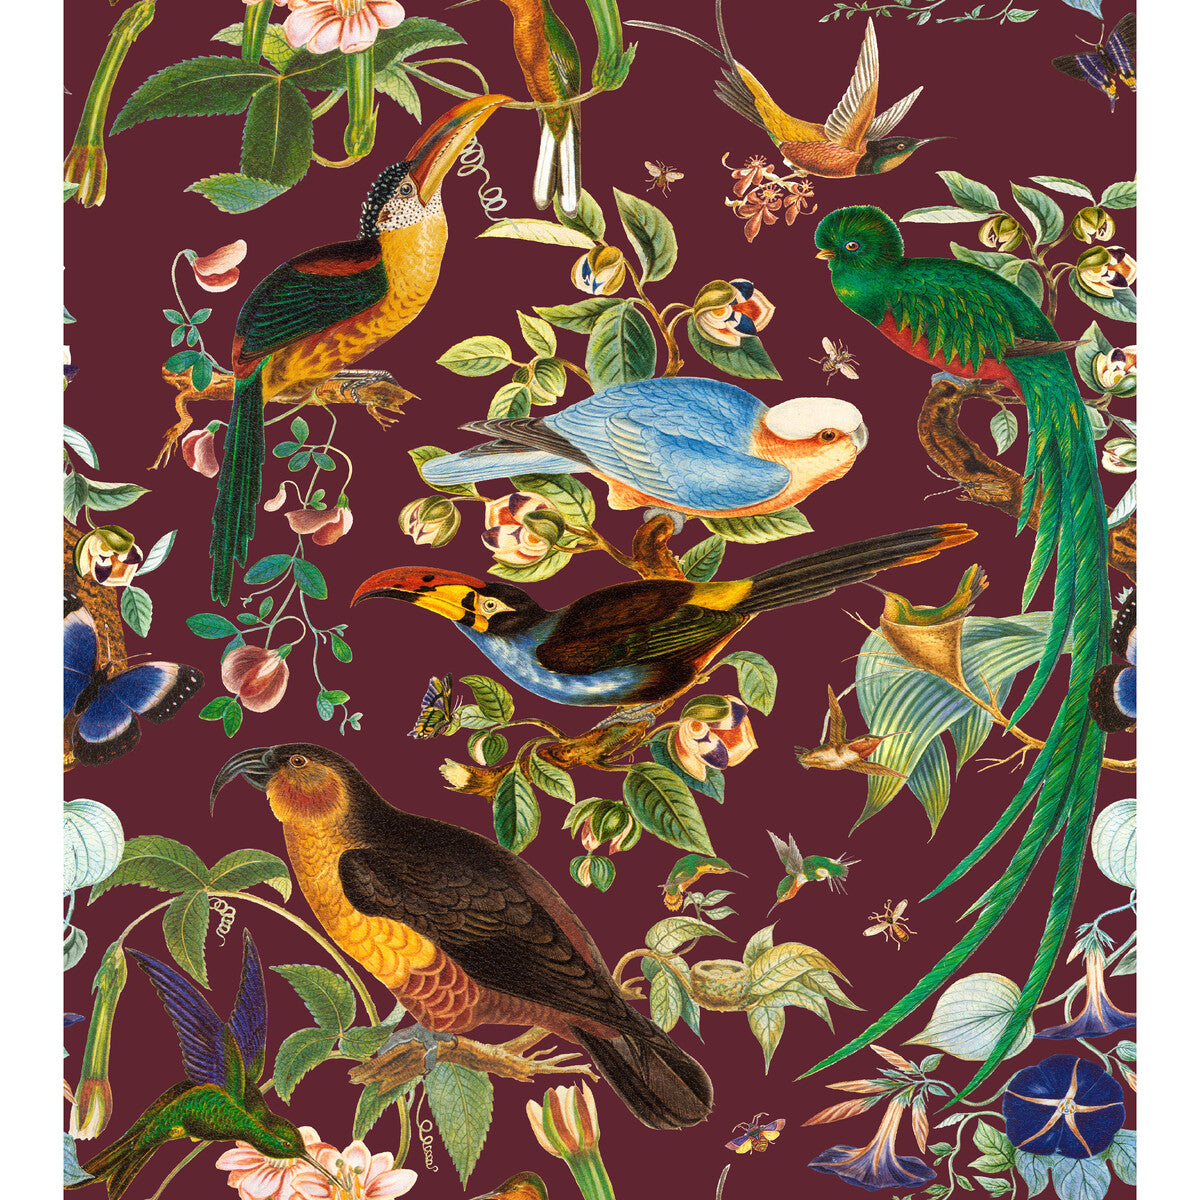 Oaxaca fabric in berenjena color - pattern GDT5562.003.0 - by Gaston y Daniela in the Gaston Nuevo Mundo collection